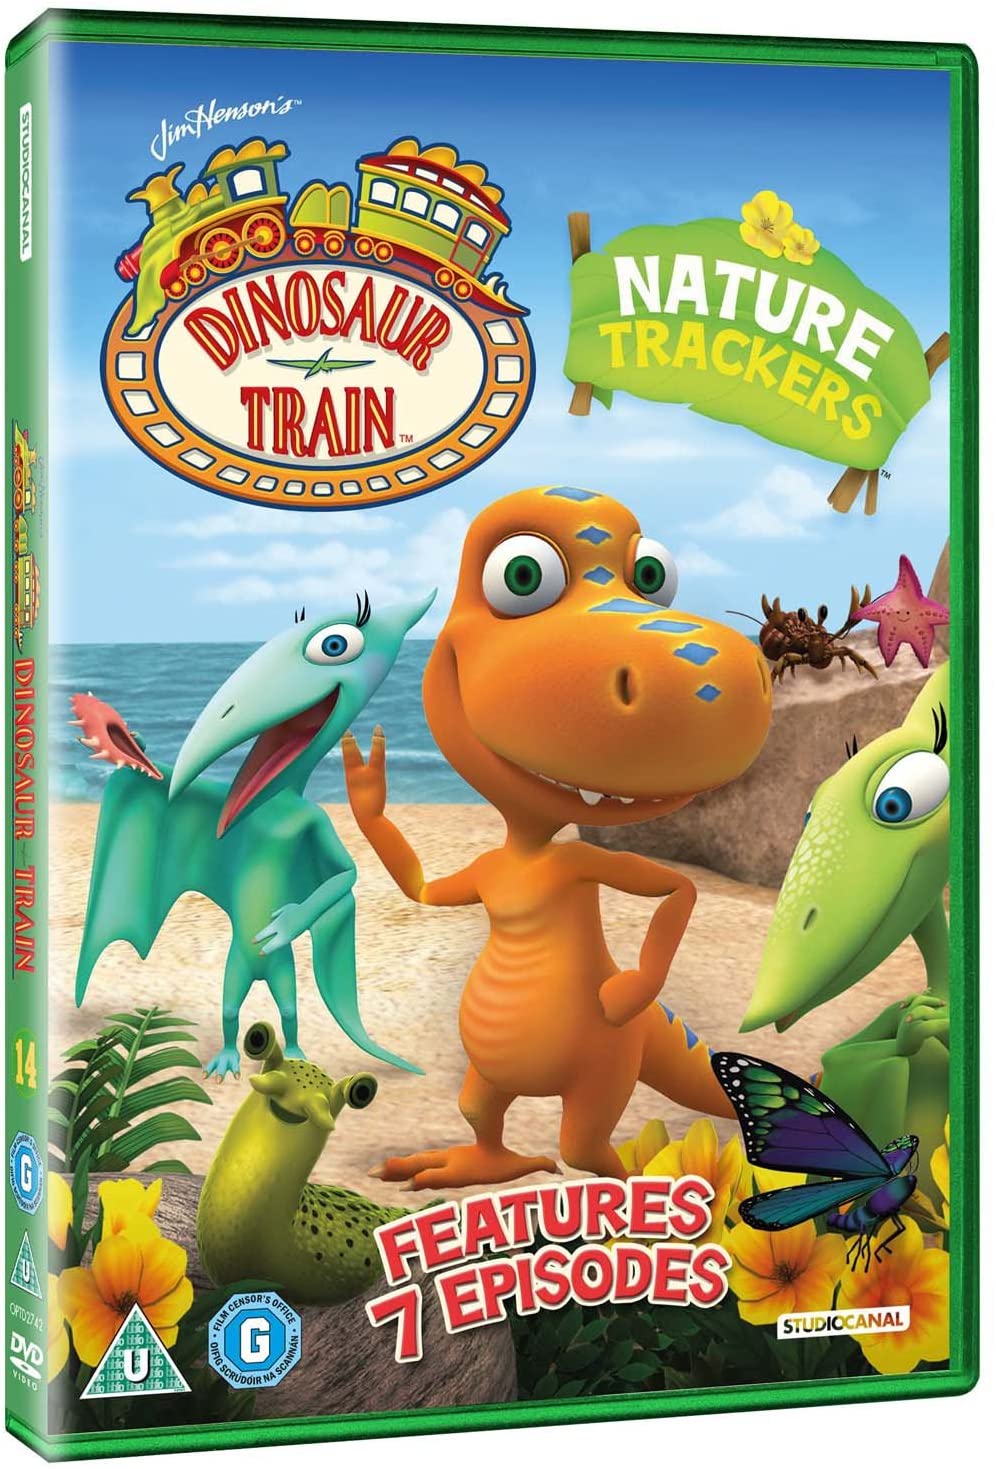 Dinosaurierzug - Nature Trackers [DVD] [2015]